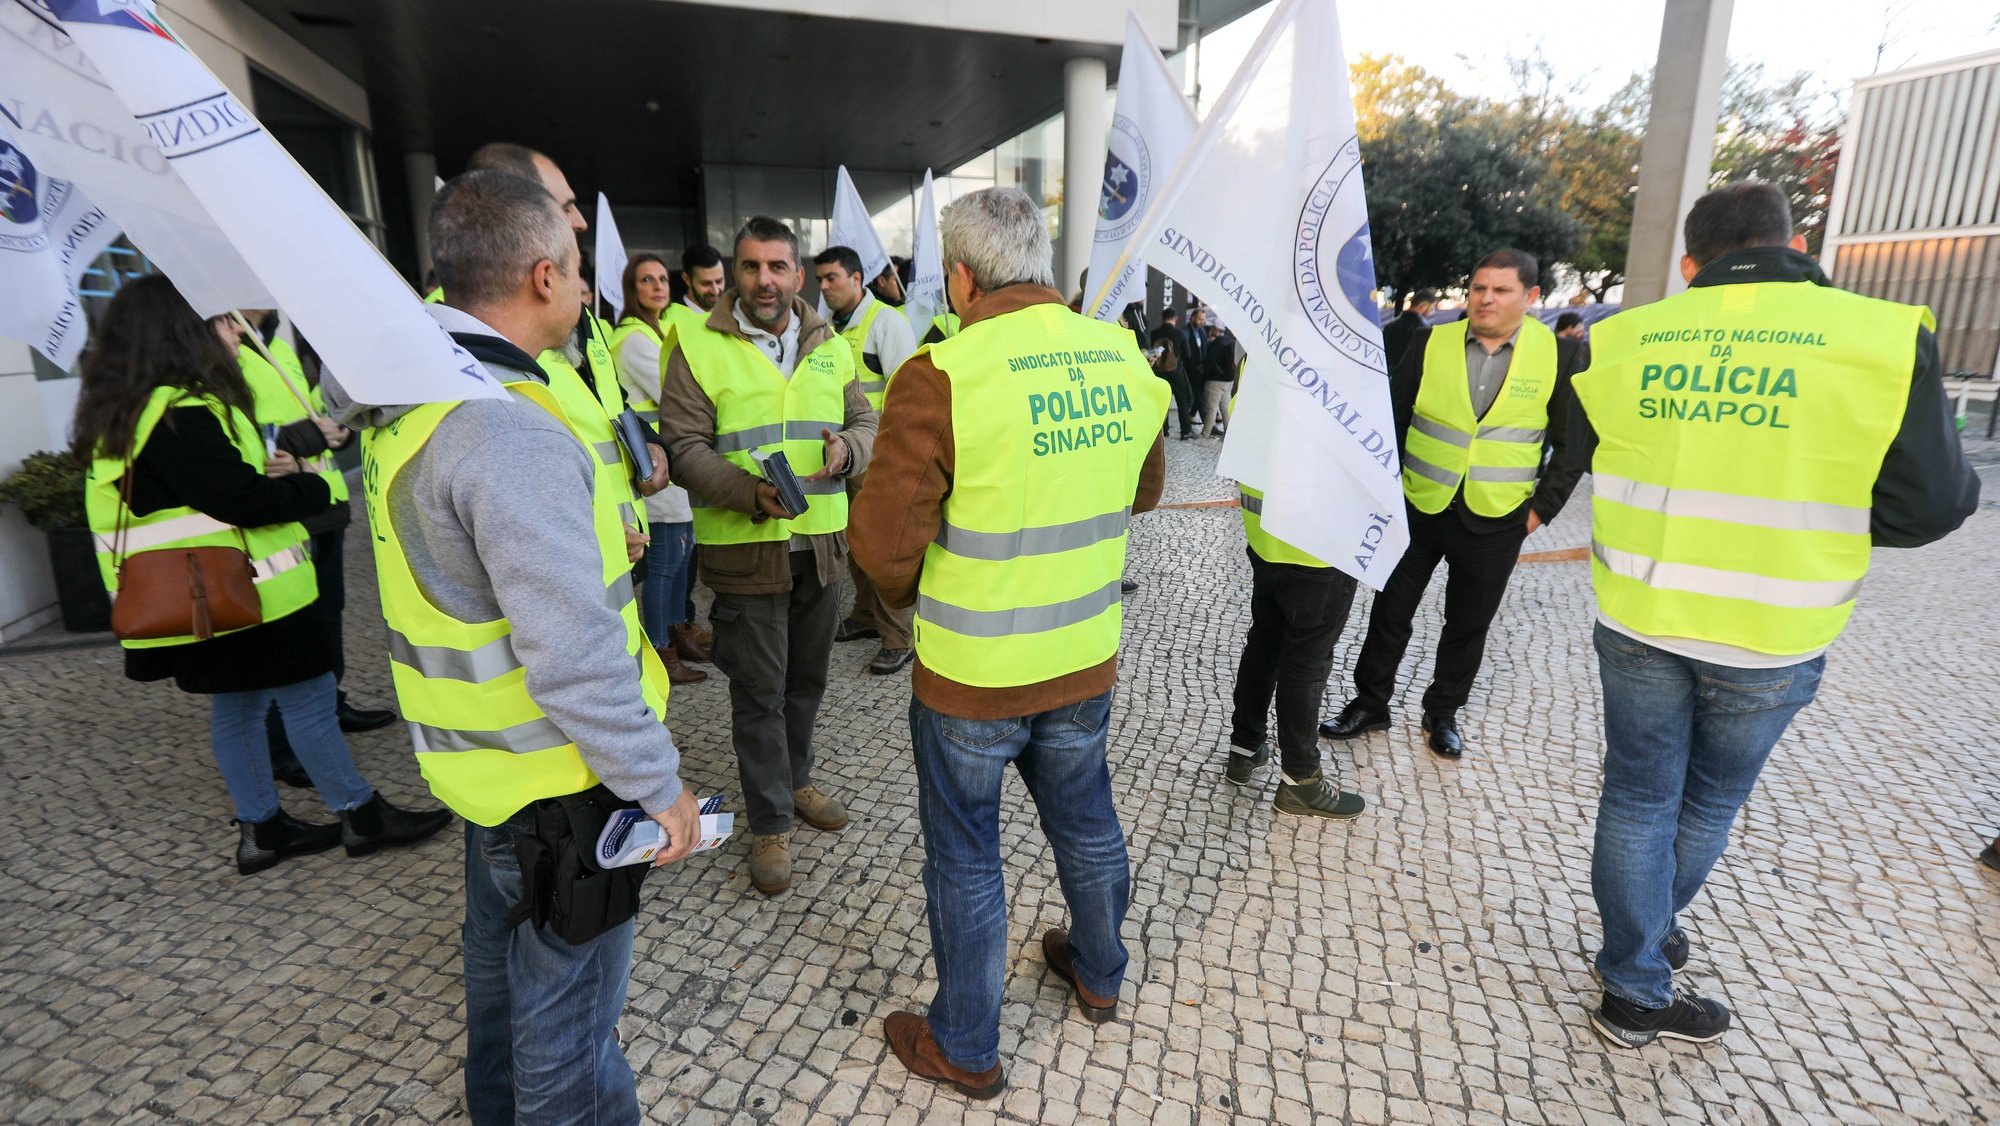 Polícias do Sindicato Nacional da Polícia (Sinapol) protestam no Parque das Nações onde decorre a Web Summit, Lisboa, 5 de novembro de 2018. MIGUEL A. LOPES/LUSA